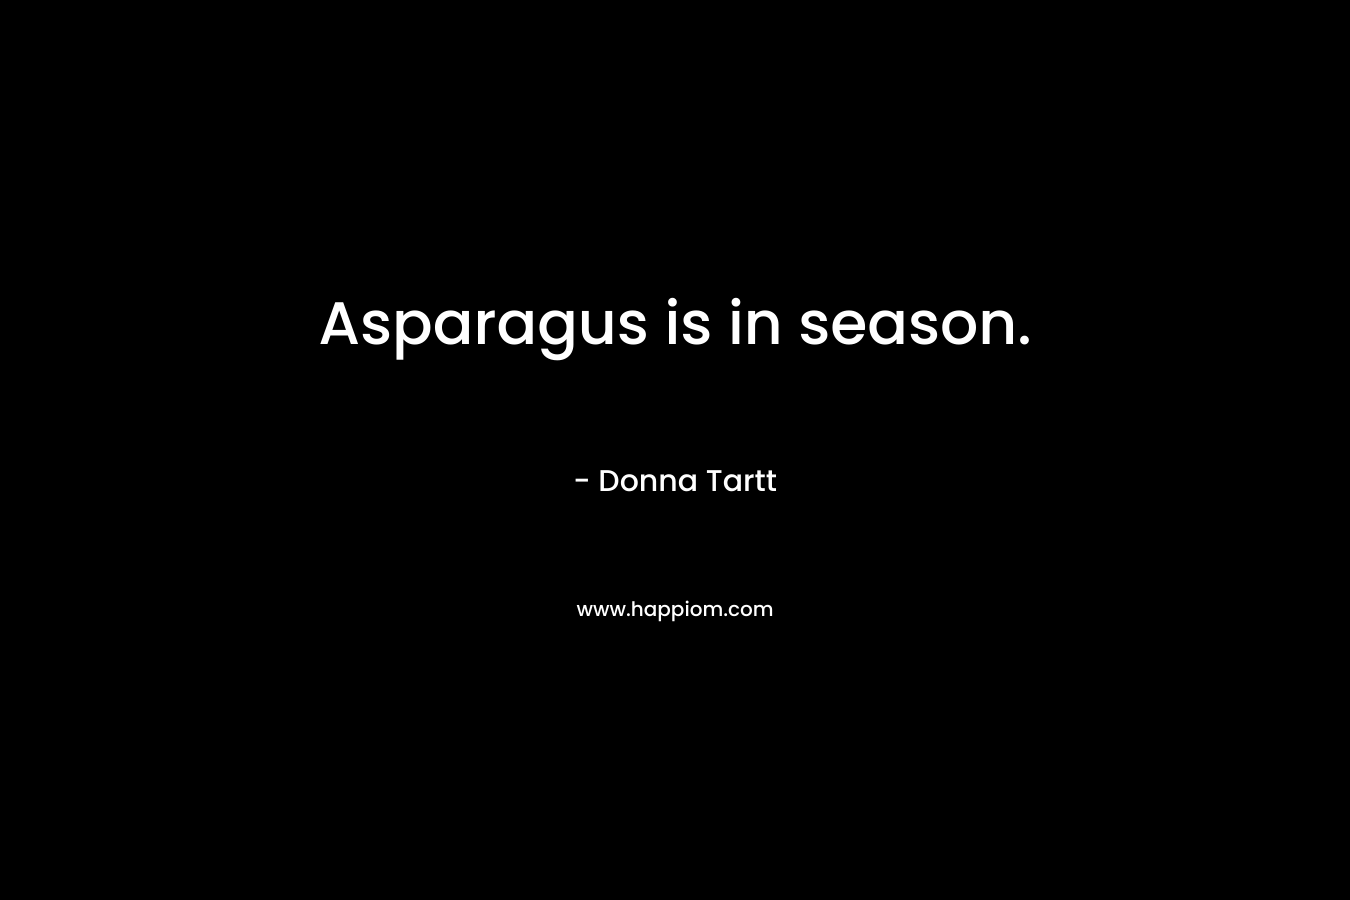 Asparagus is in season.